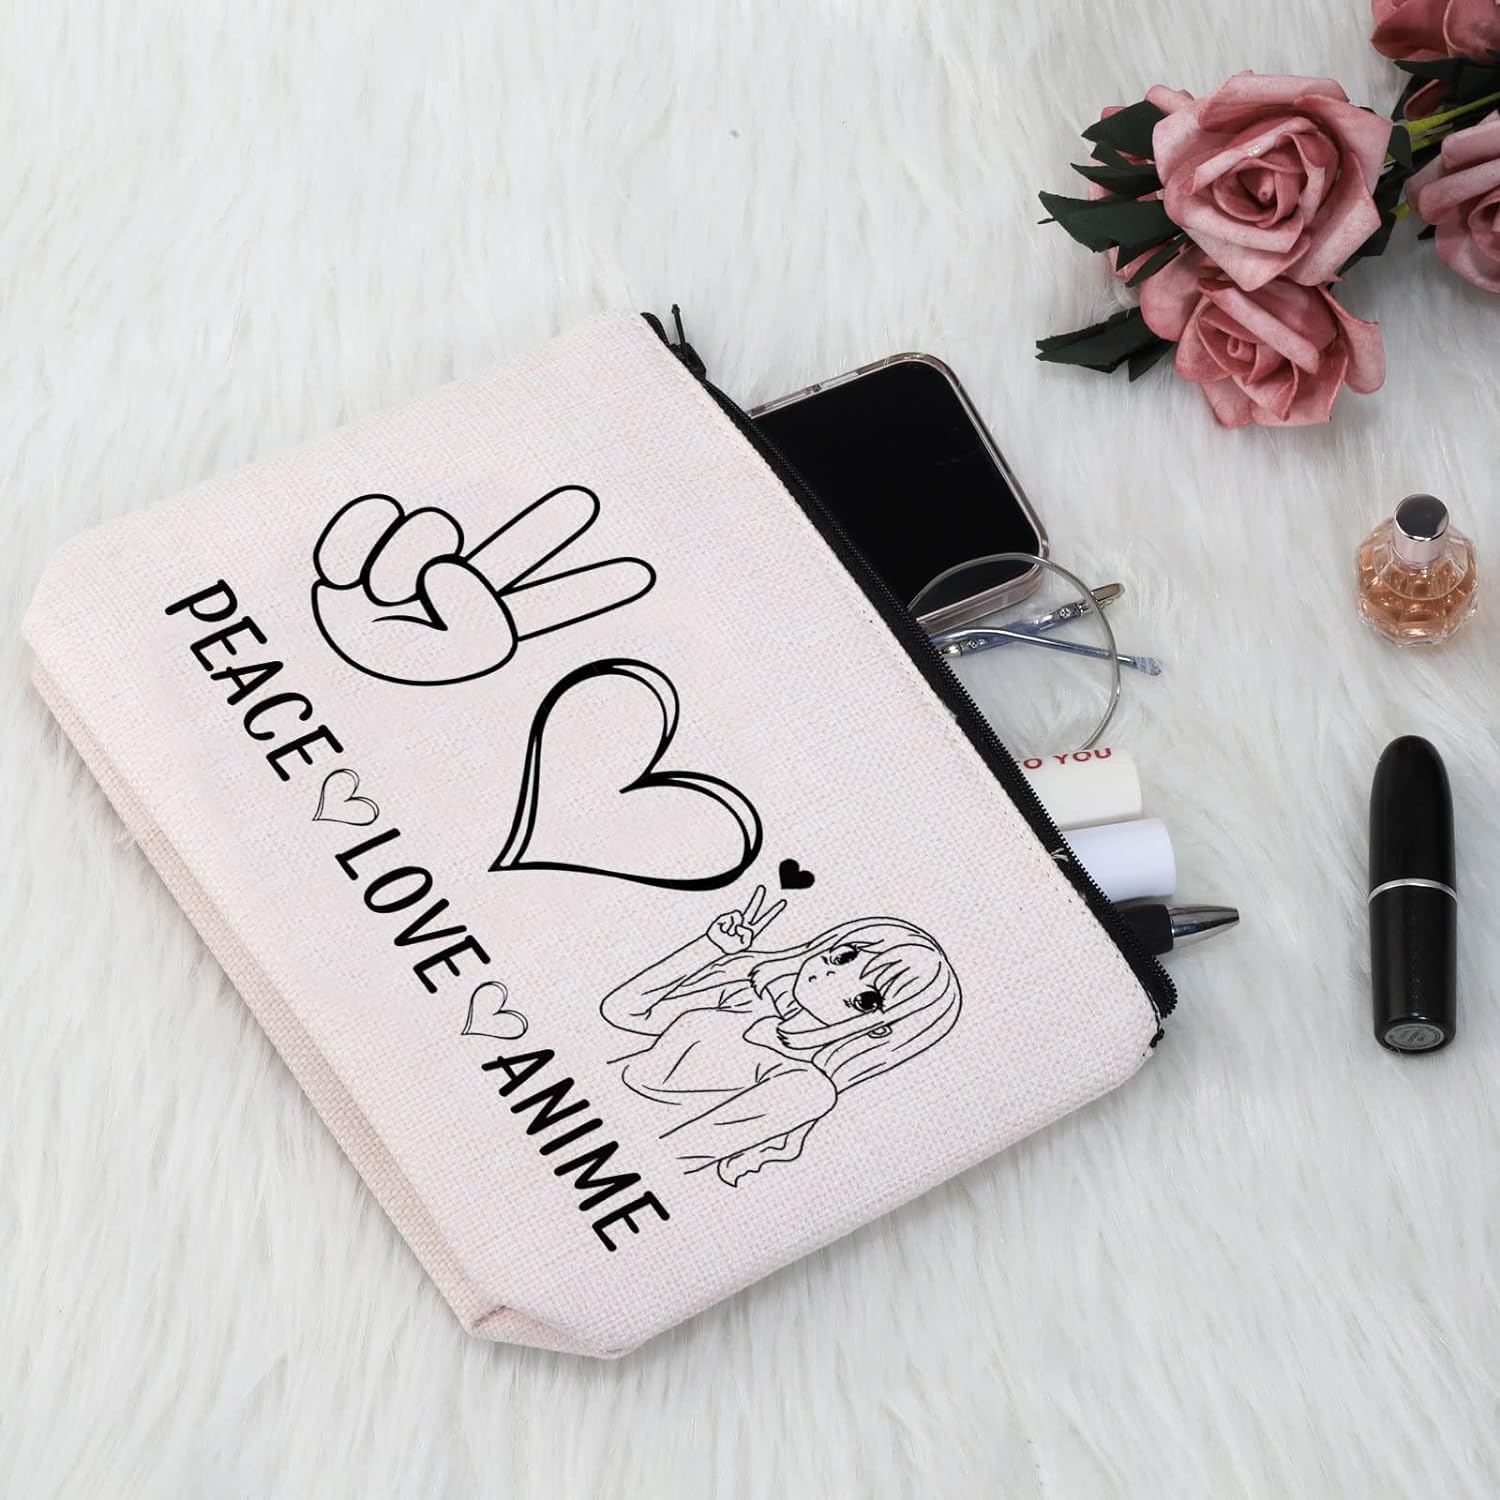 Great Choice Products Anime Lover Gift Peace Love Anime Makeup Bag Japan Anime Fan Cosmetic Bag Anime Merch Zipper Travel Bag (Peace Love Anim…